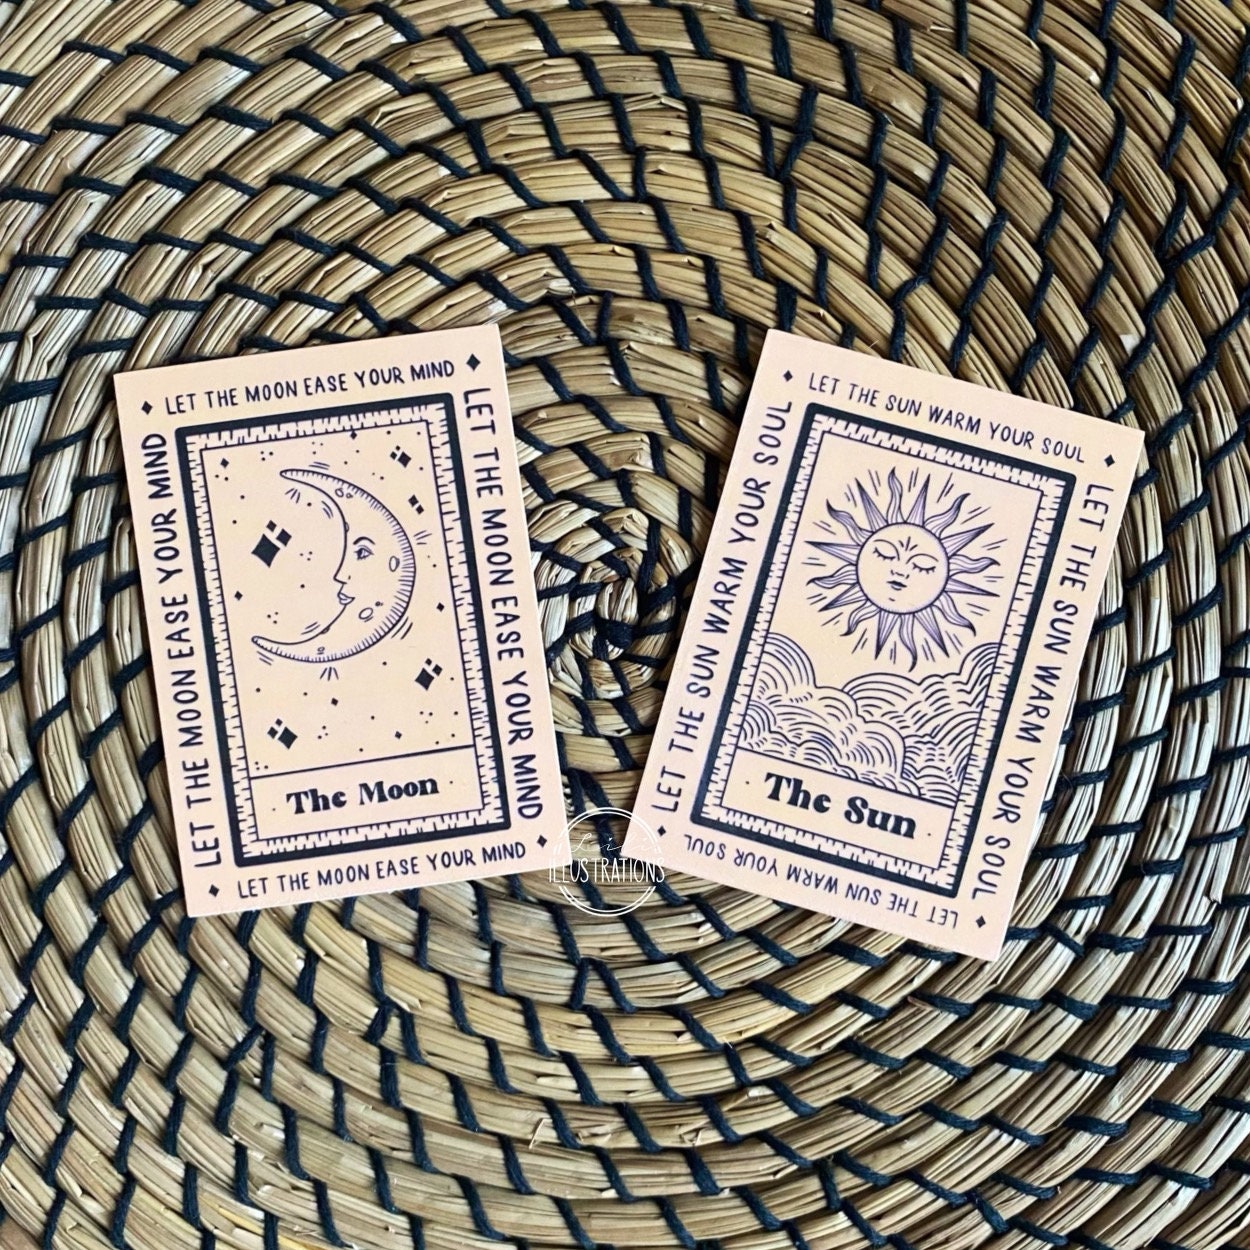 the-sun-moon-cards-stickers-digital-art-etsy